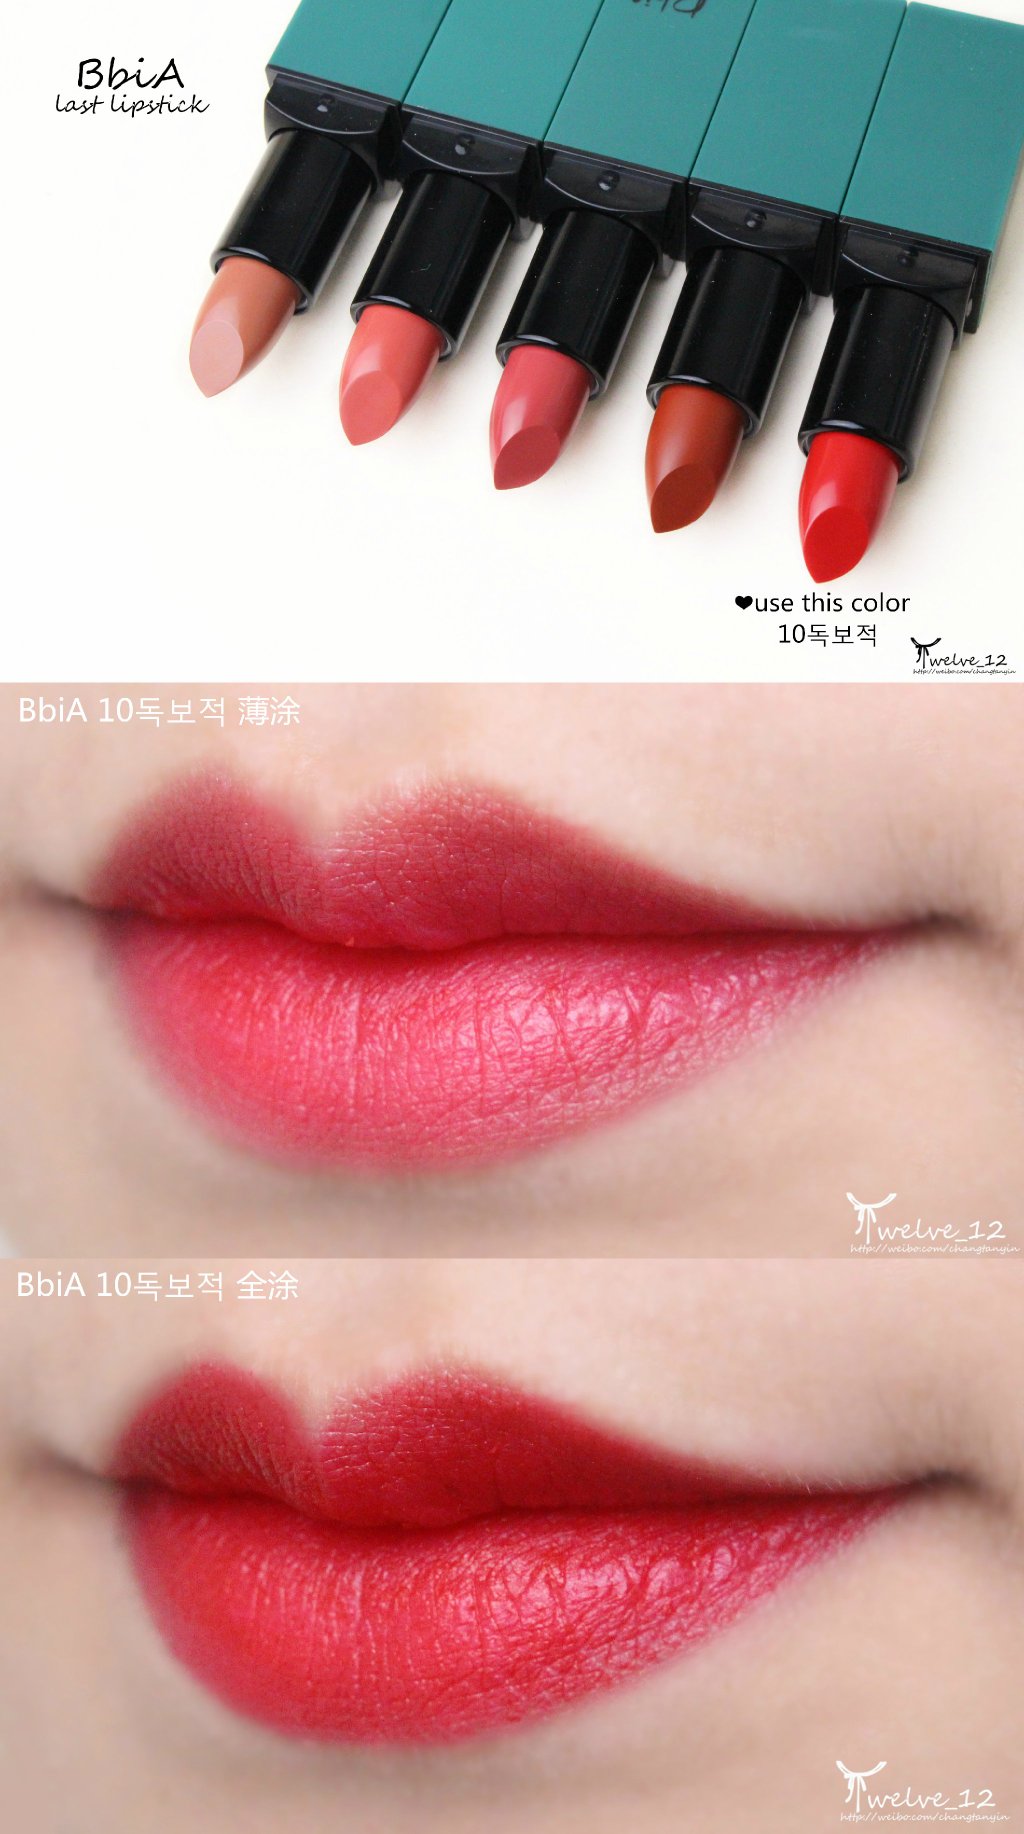 BbiA last lipstick 绿管唇膏06/07/08/09/10 五色试色